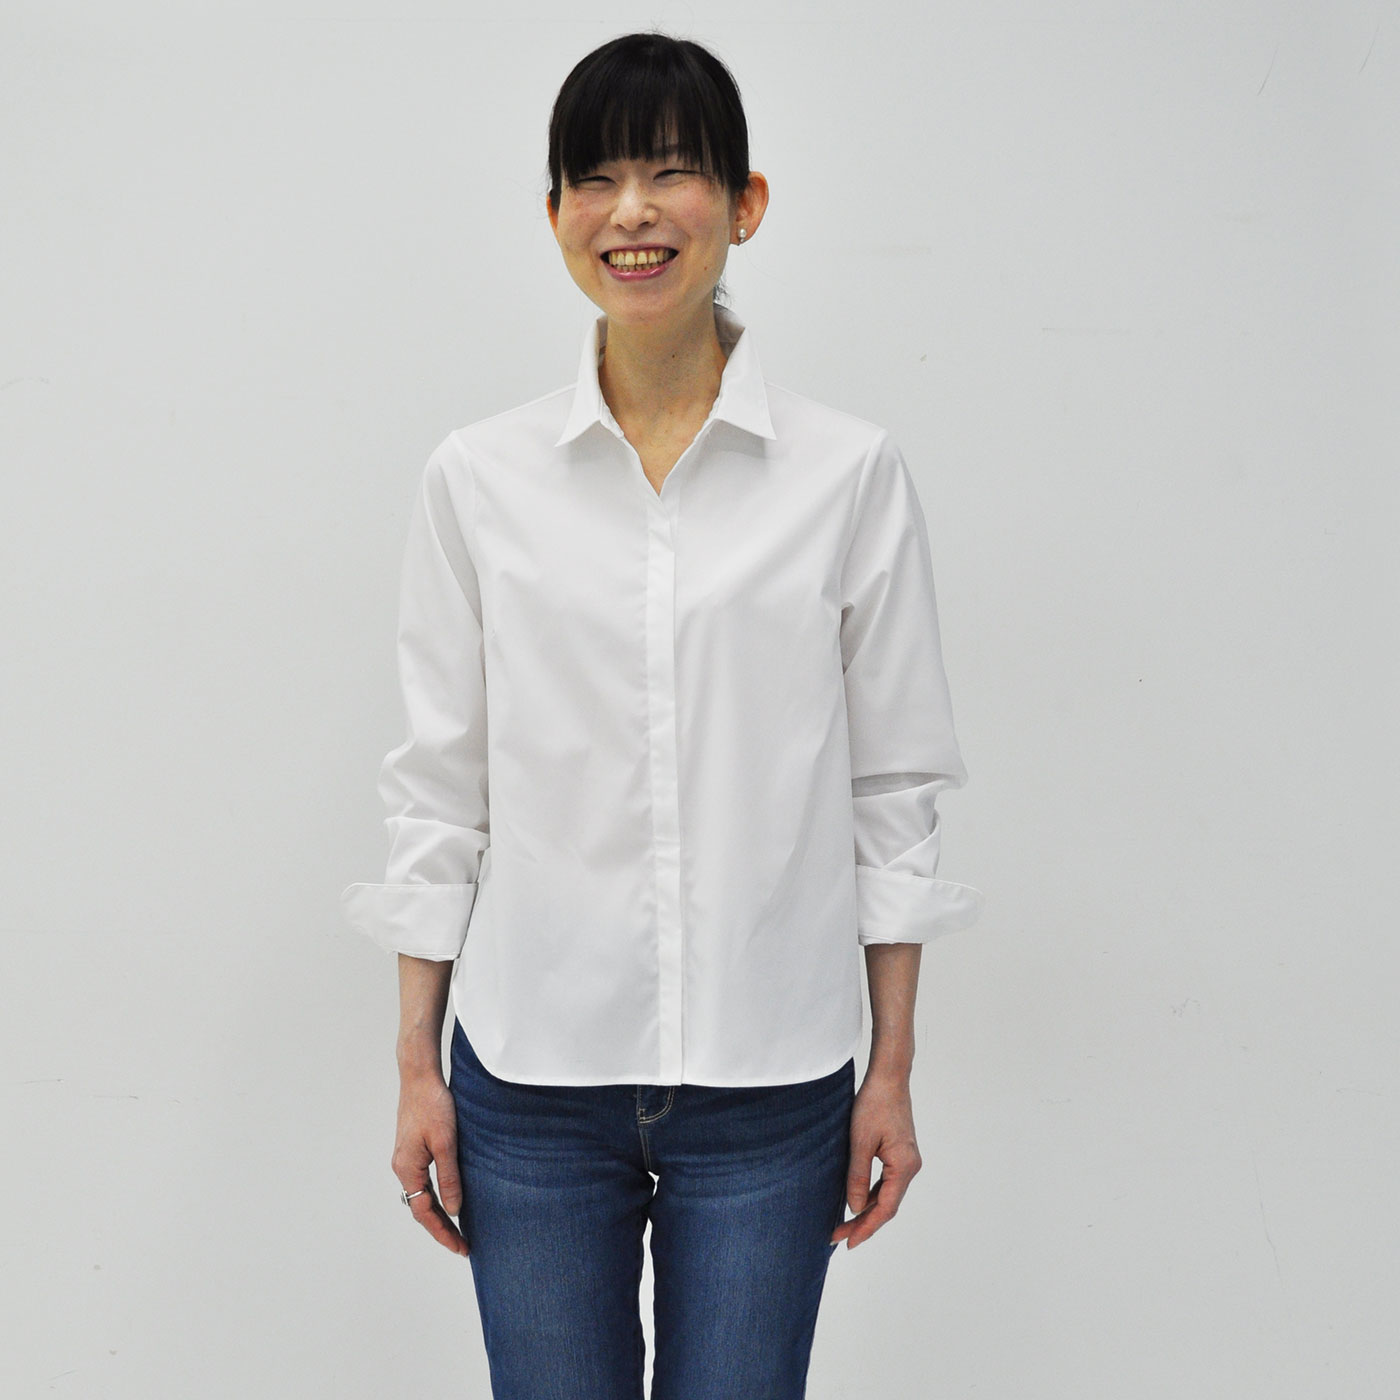 Lx 大人女性の今が輝く 理想の白シャツ レディースファッション アラフィフ 50代のレディースファッション 雑貨の通販 Felissimo Lx